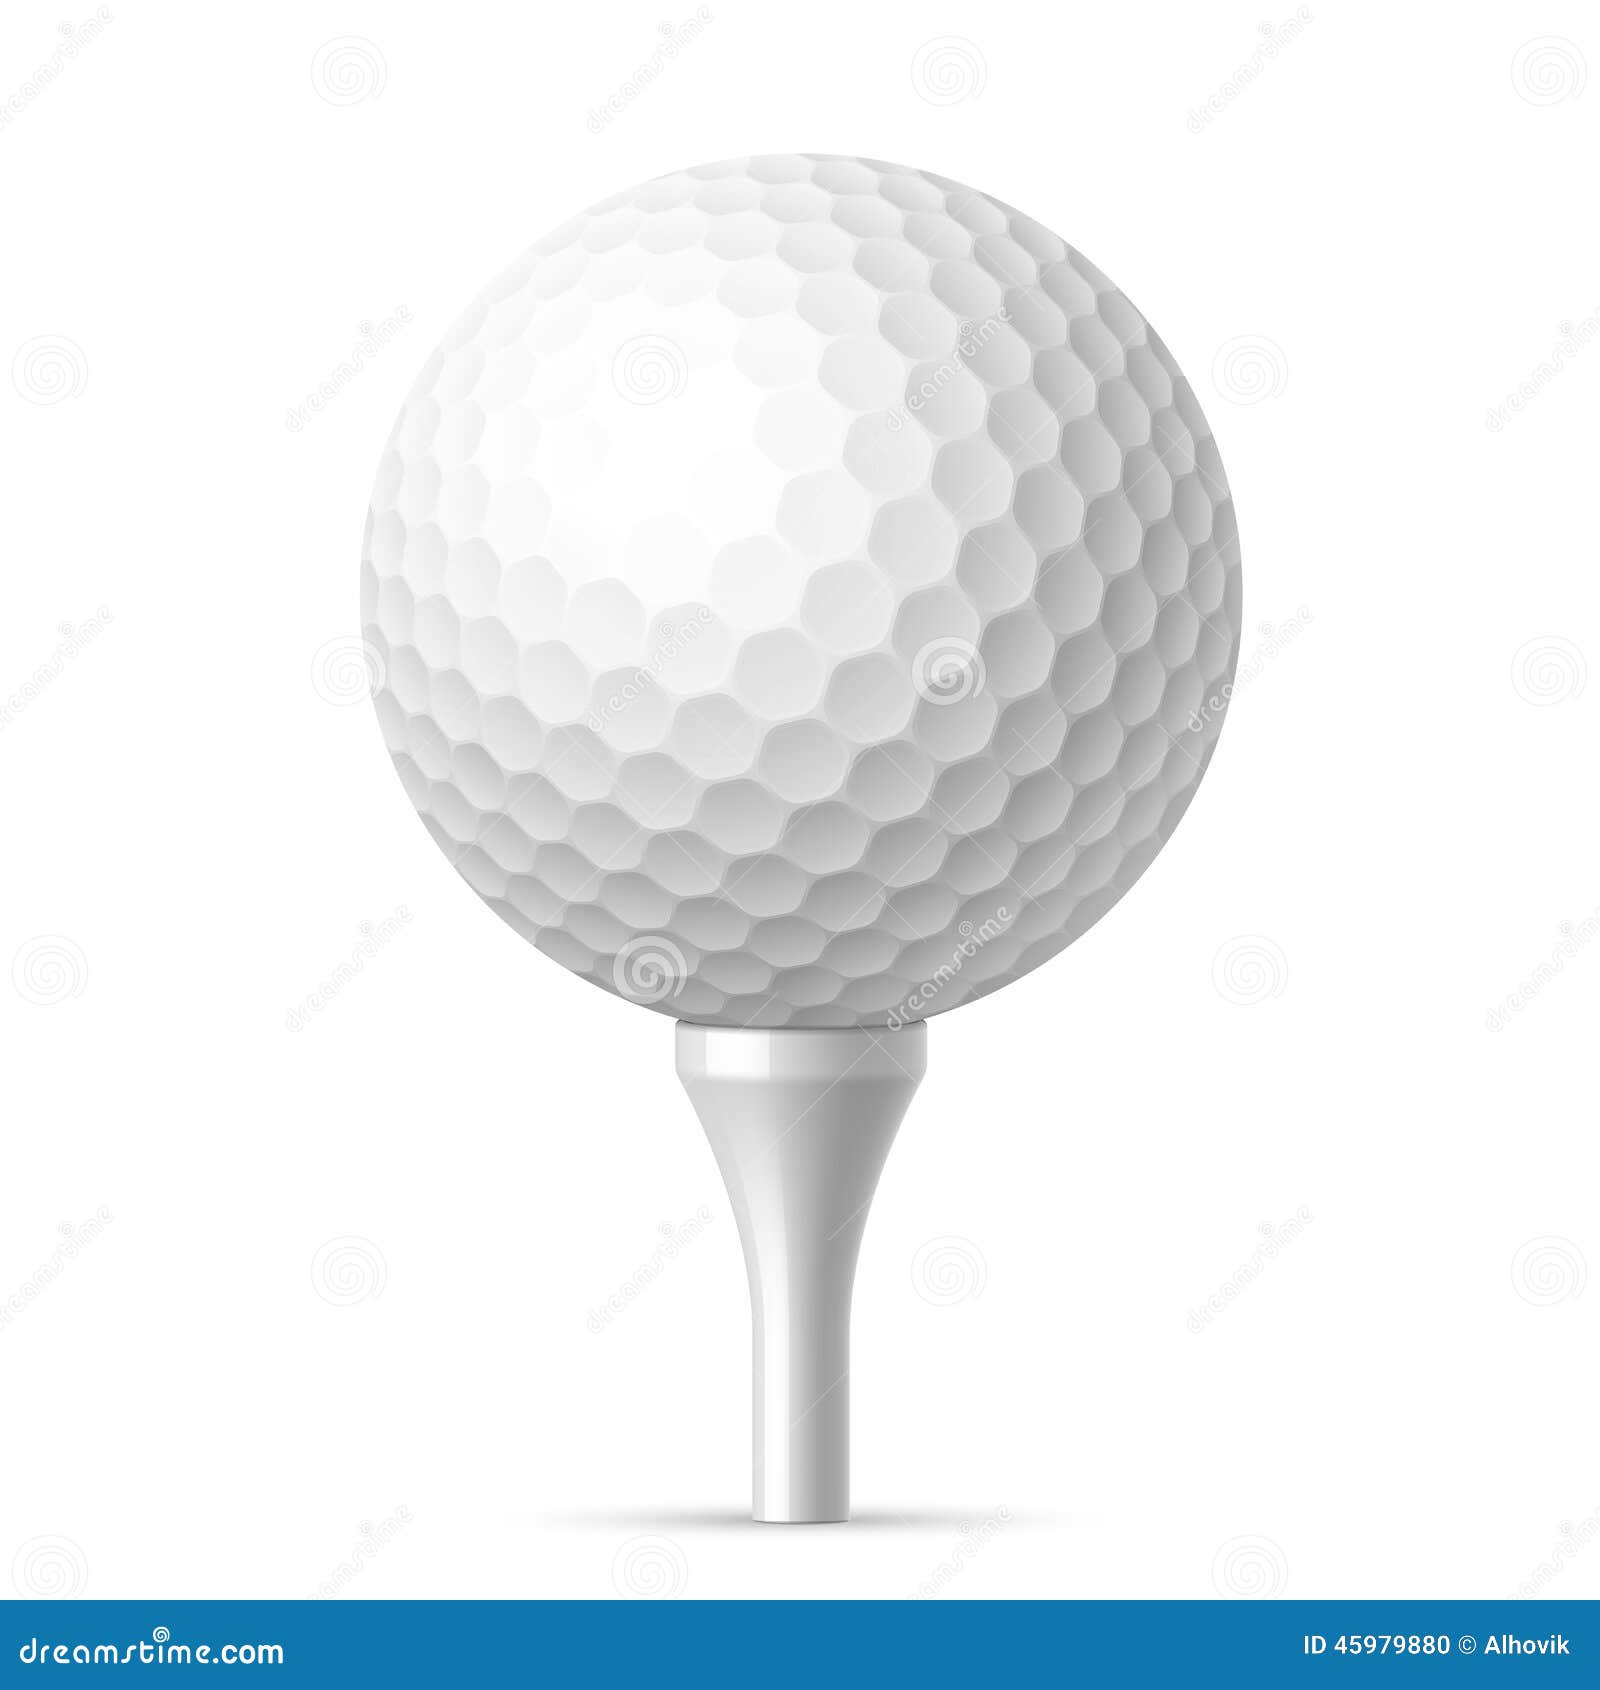 clipart golf ball on tee - photo #13